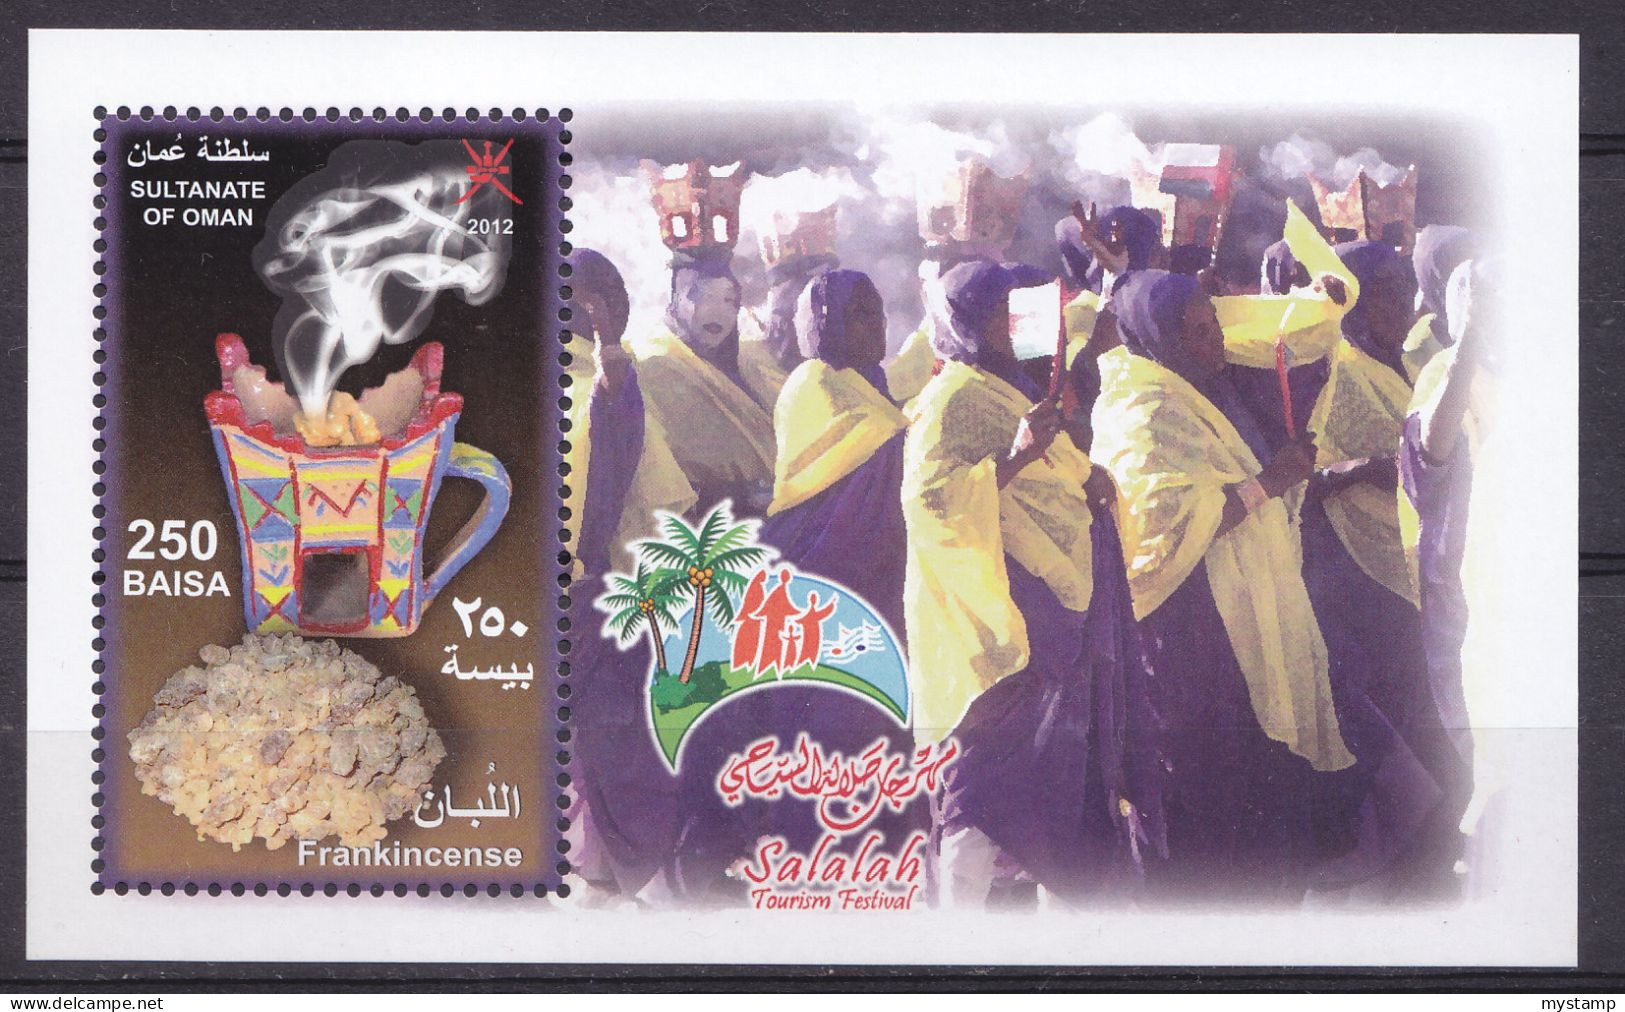 SULTANTE OMAN M/S  HIRTAGE Stamp MINT NEVER HINGED  SET - Oman